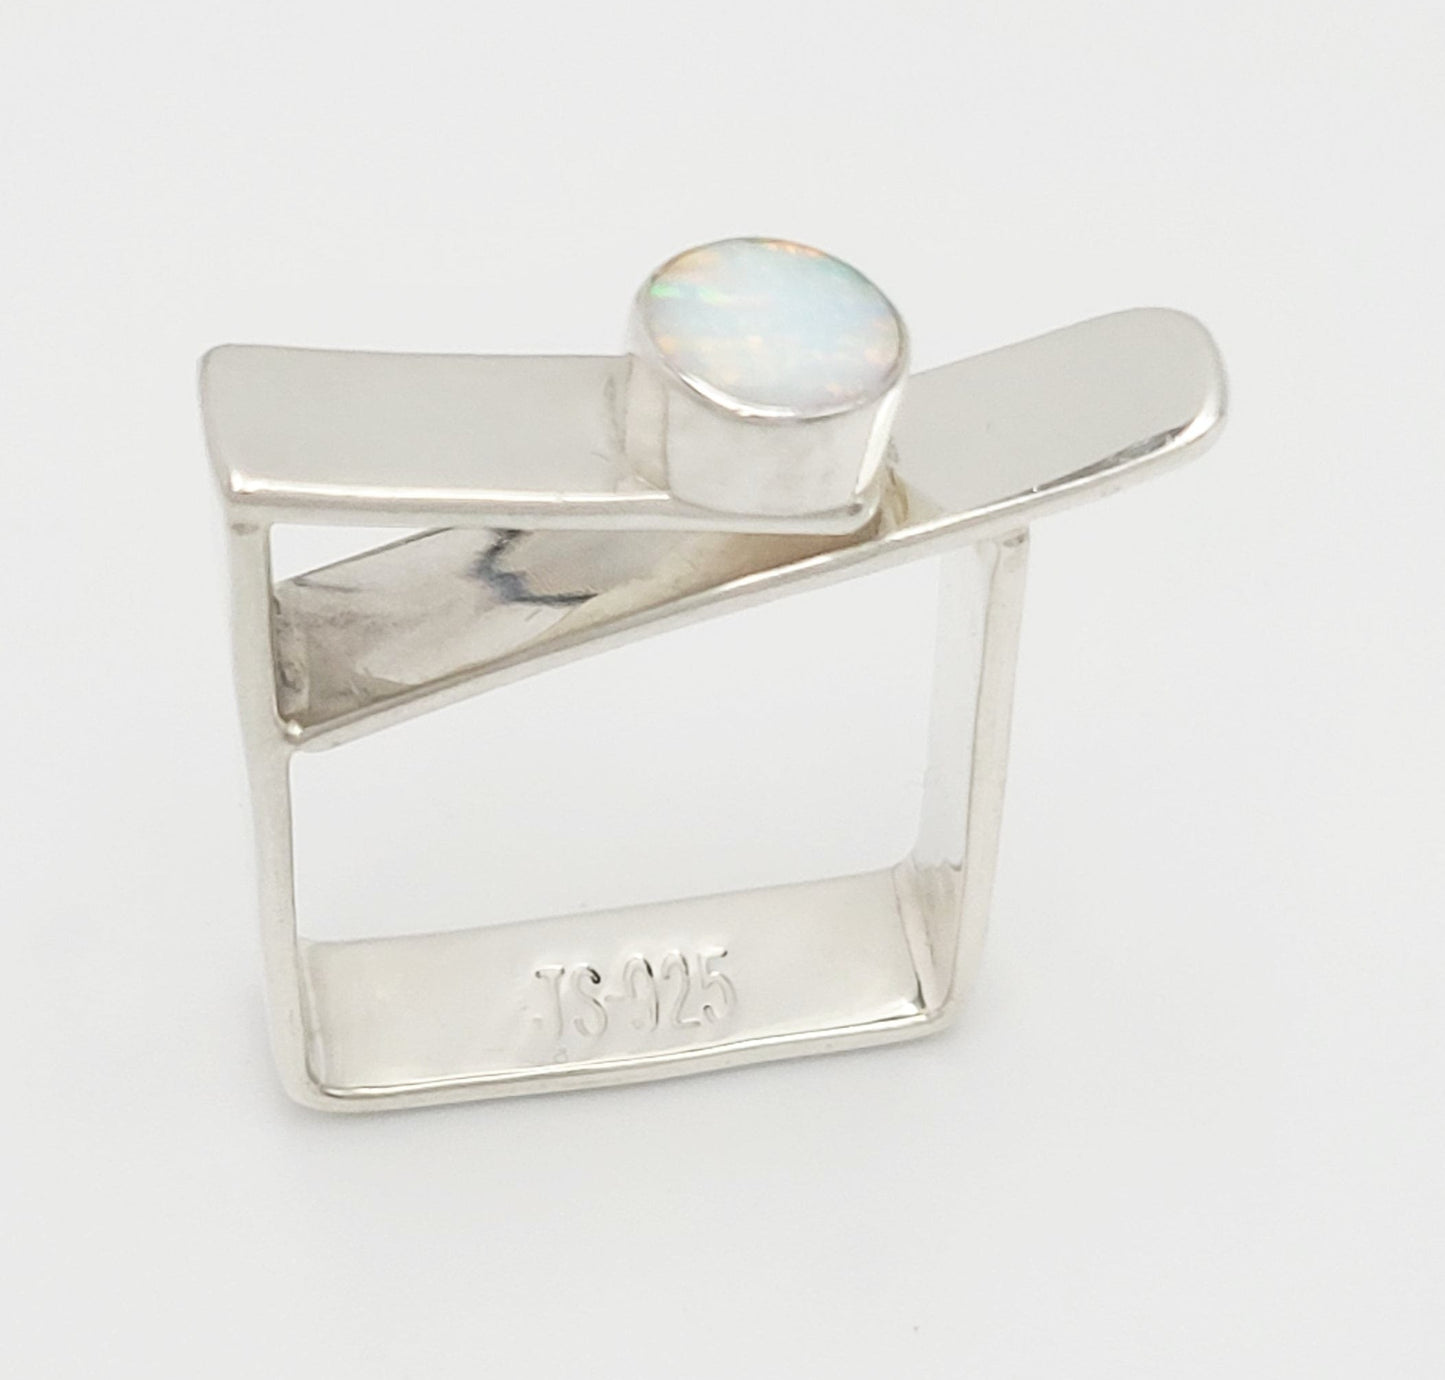 Julie Sandlau Jewelry Danish Designer Julie Sandlau Retired Modernist Abstract Sterling Opal Ring